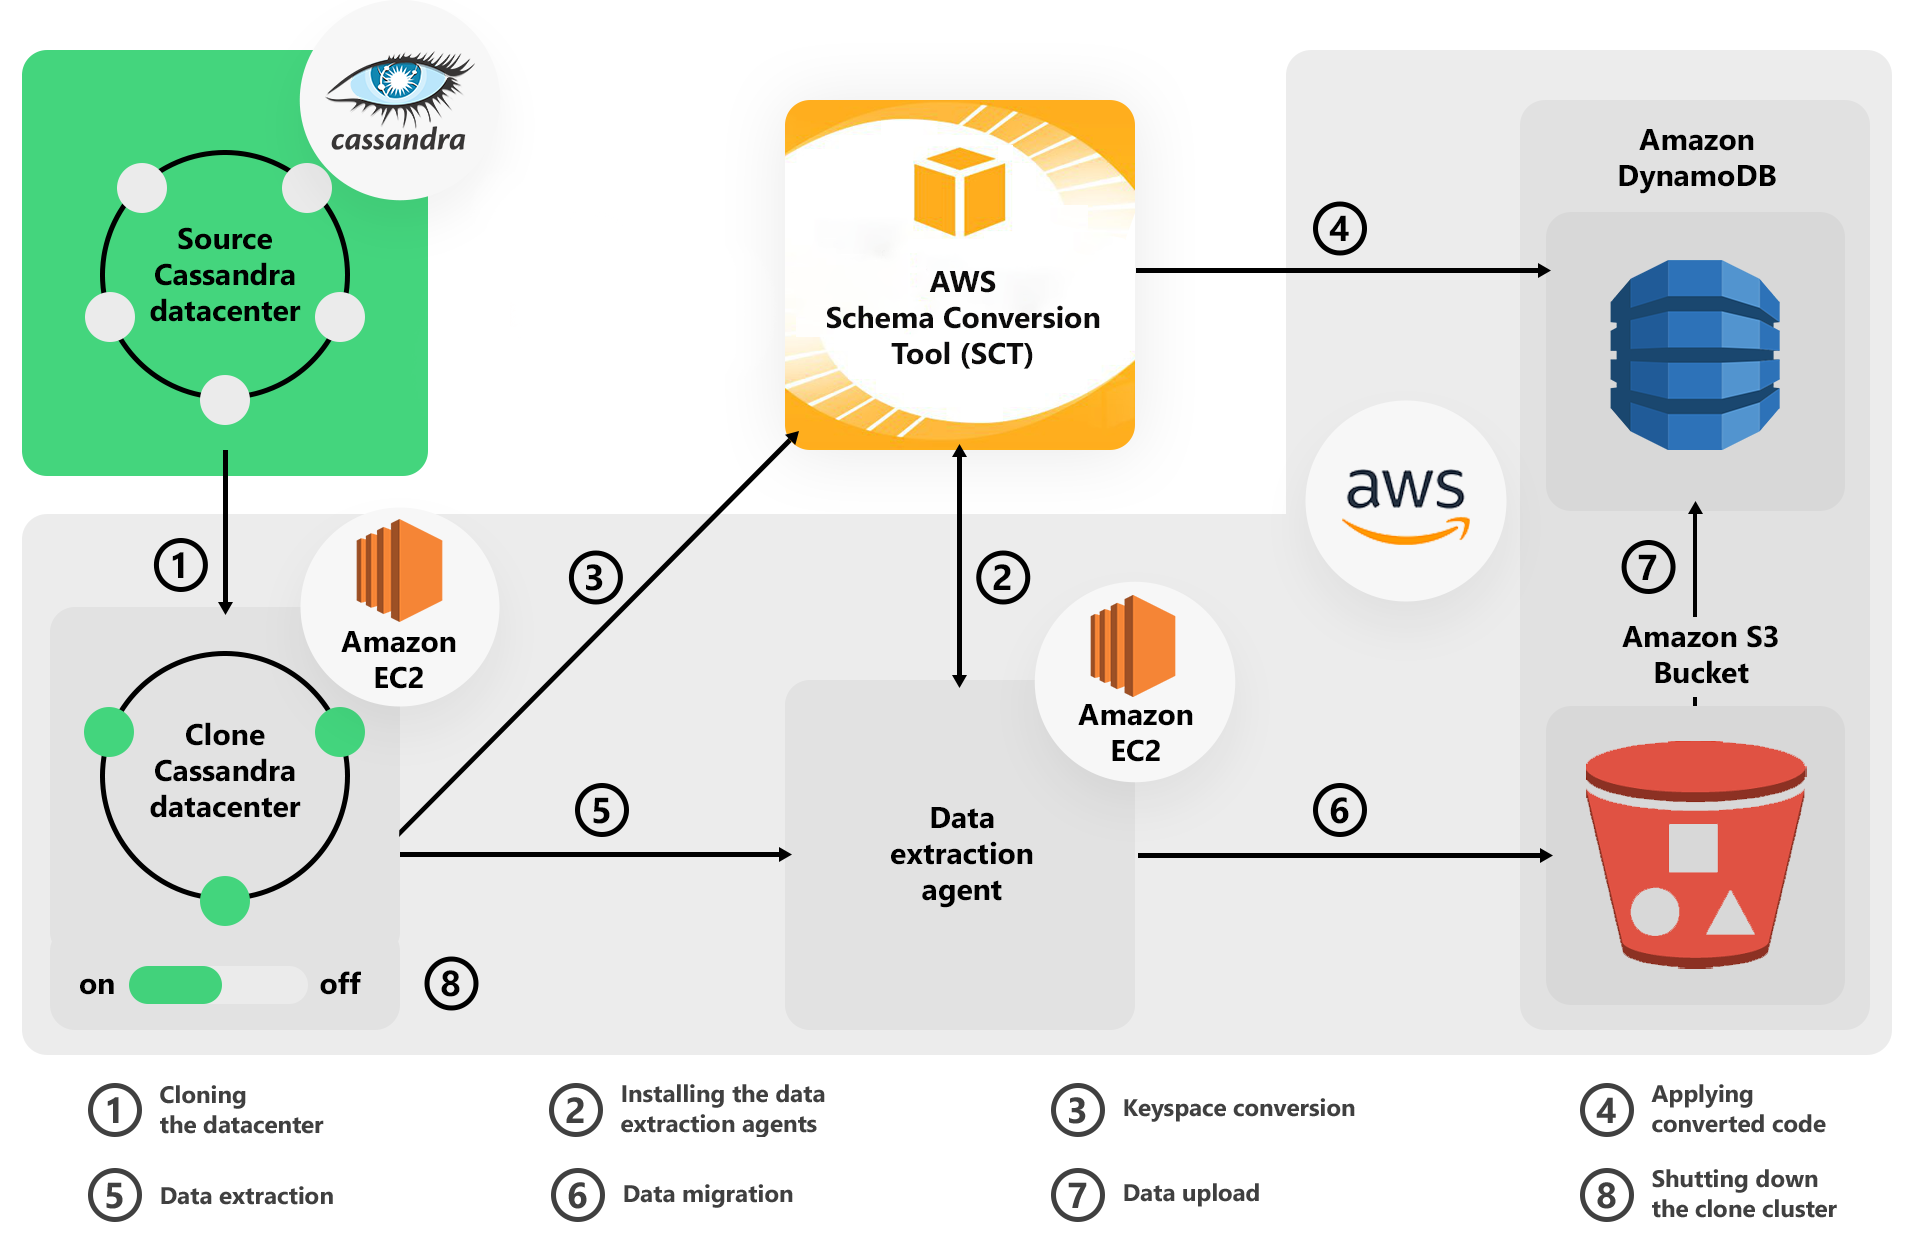 Simplifying the process for migrating Cassandra to Amazon DynamoDB